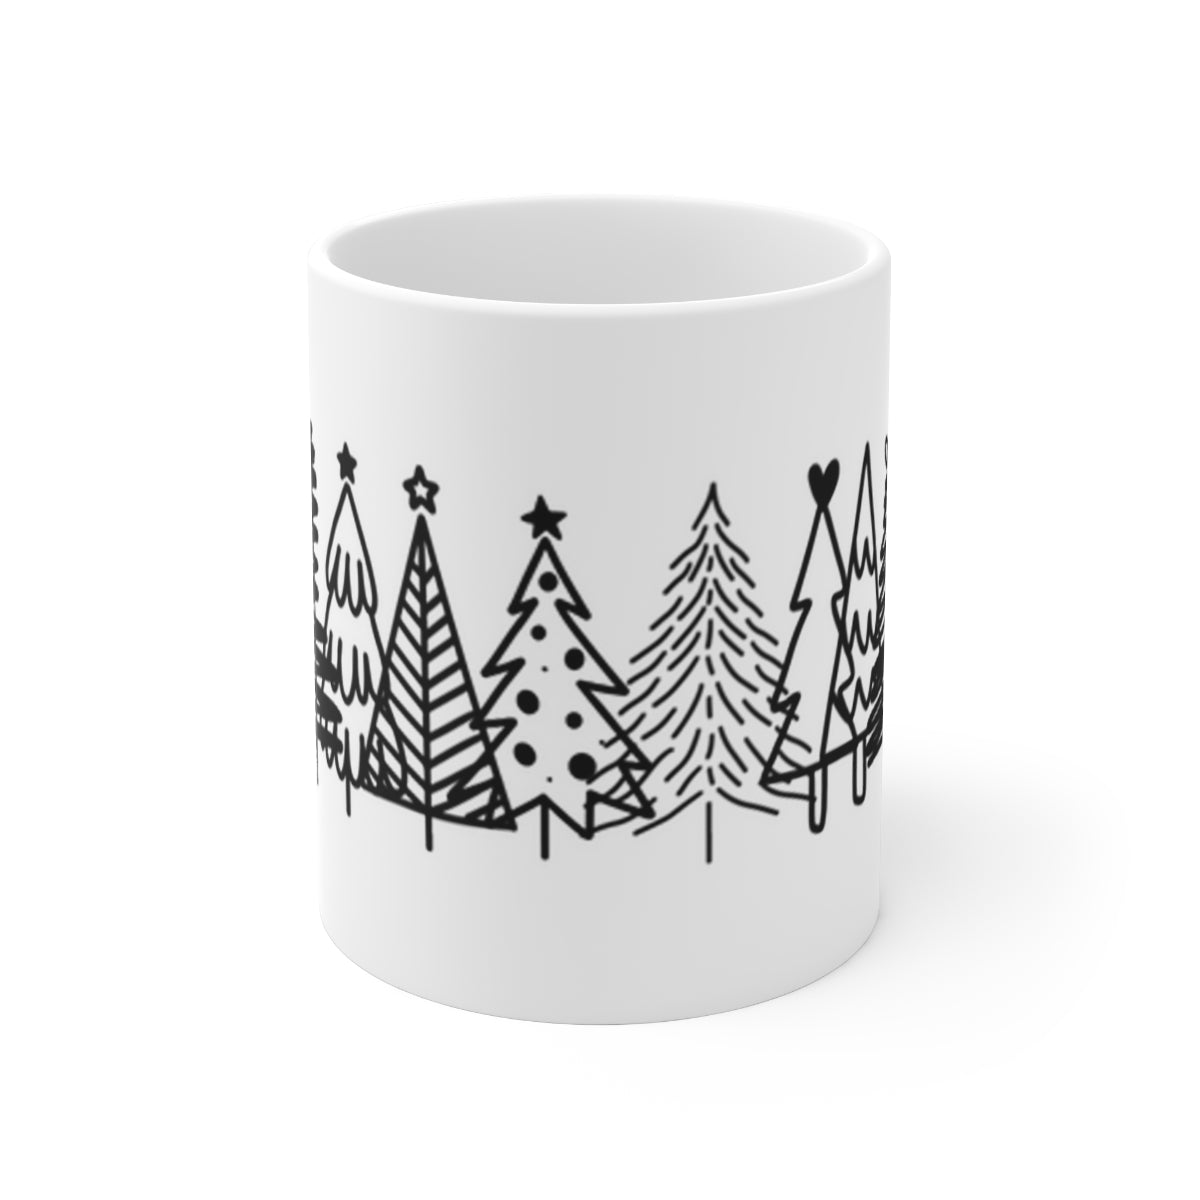 Many Christmas Trees Wrap Around - POD -Ceramic Mug 11oz